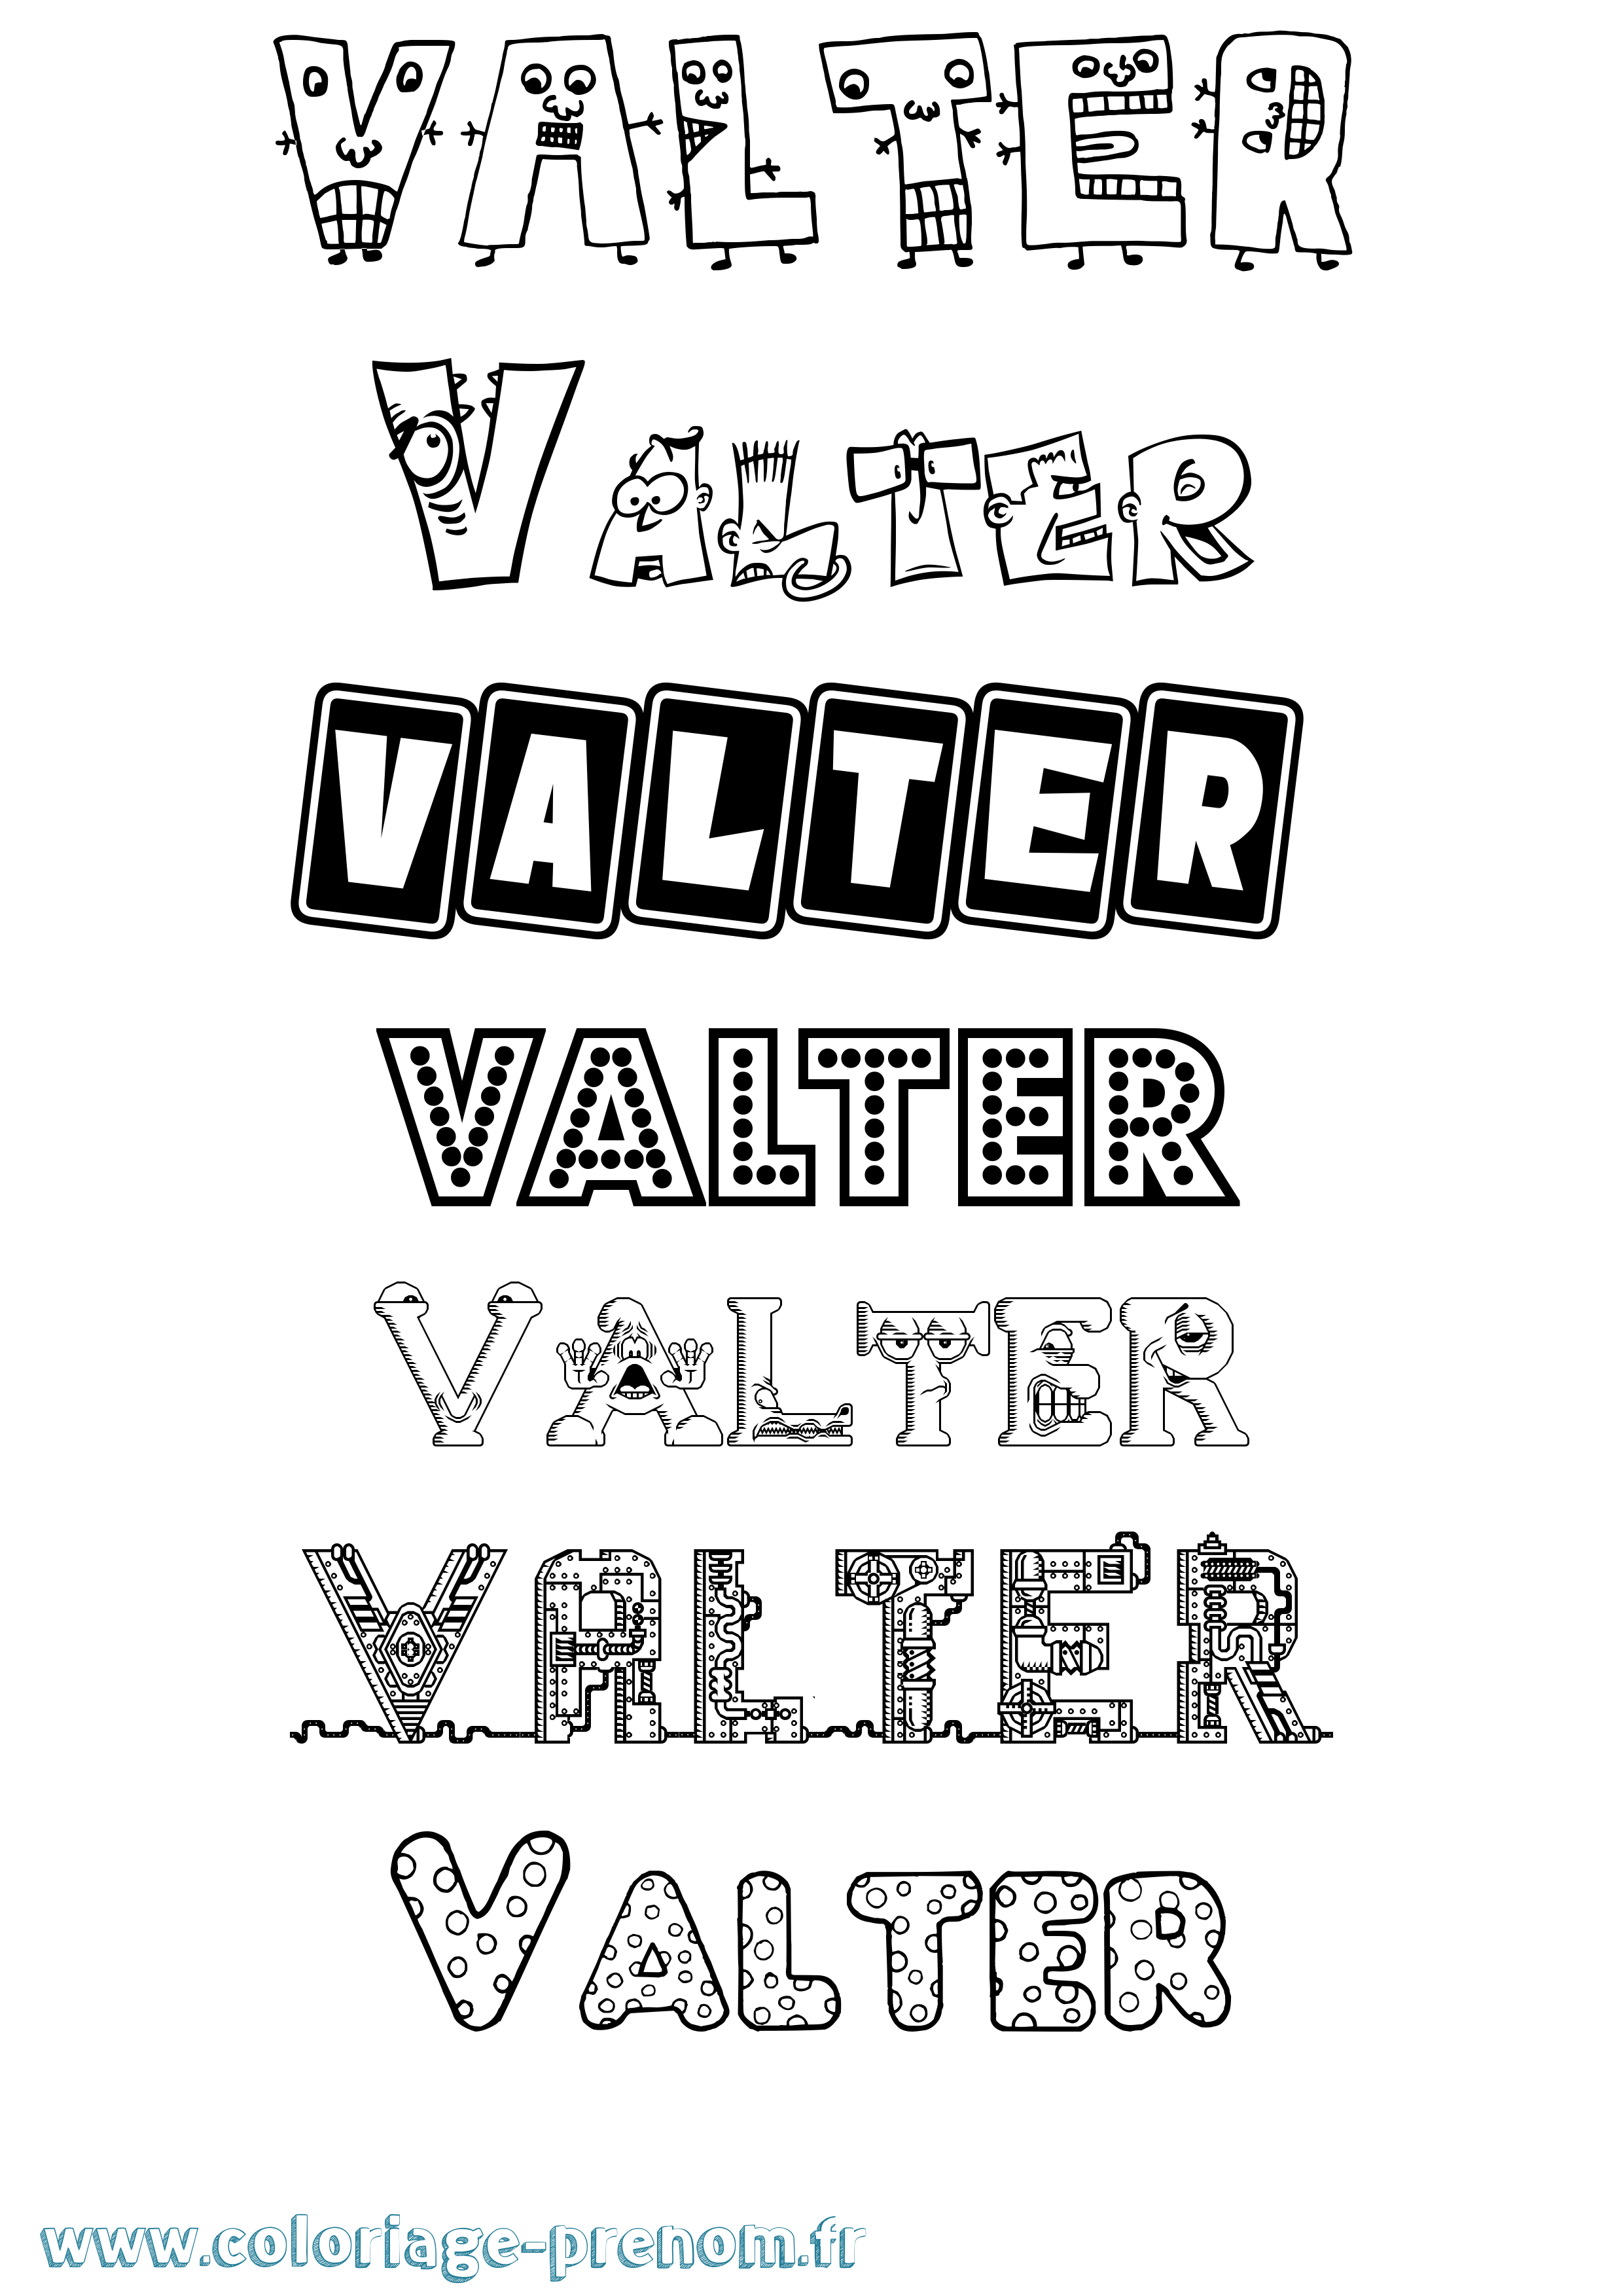 Coloriage prénom Valter Fun